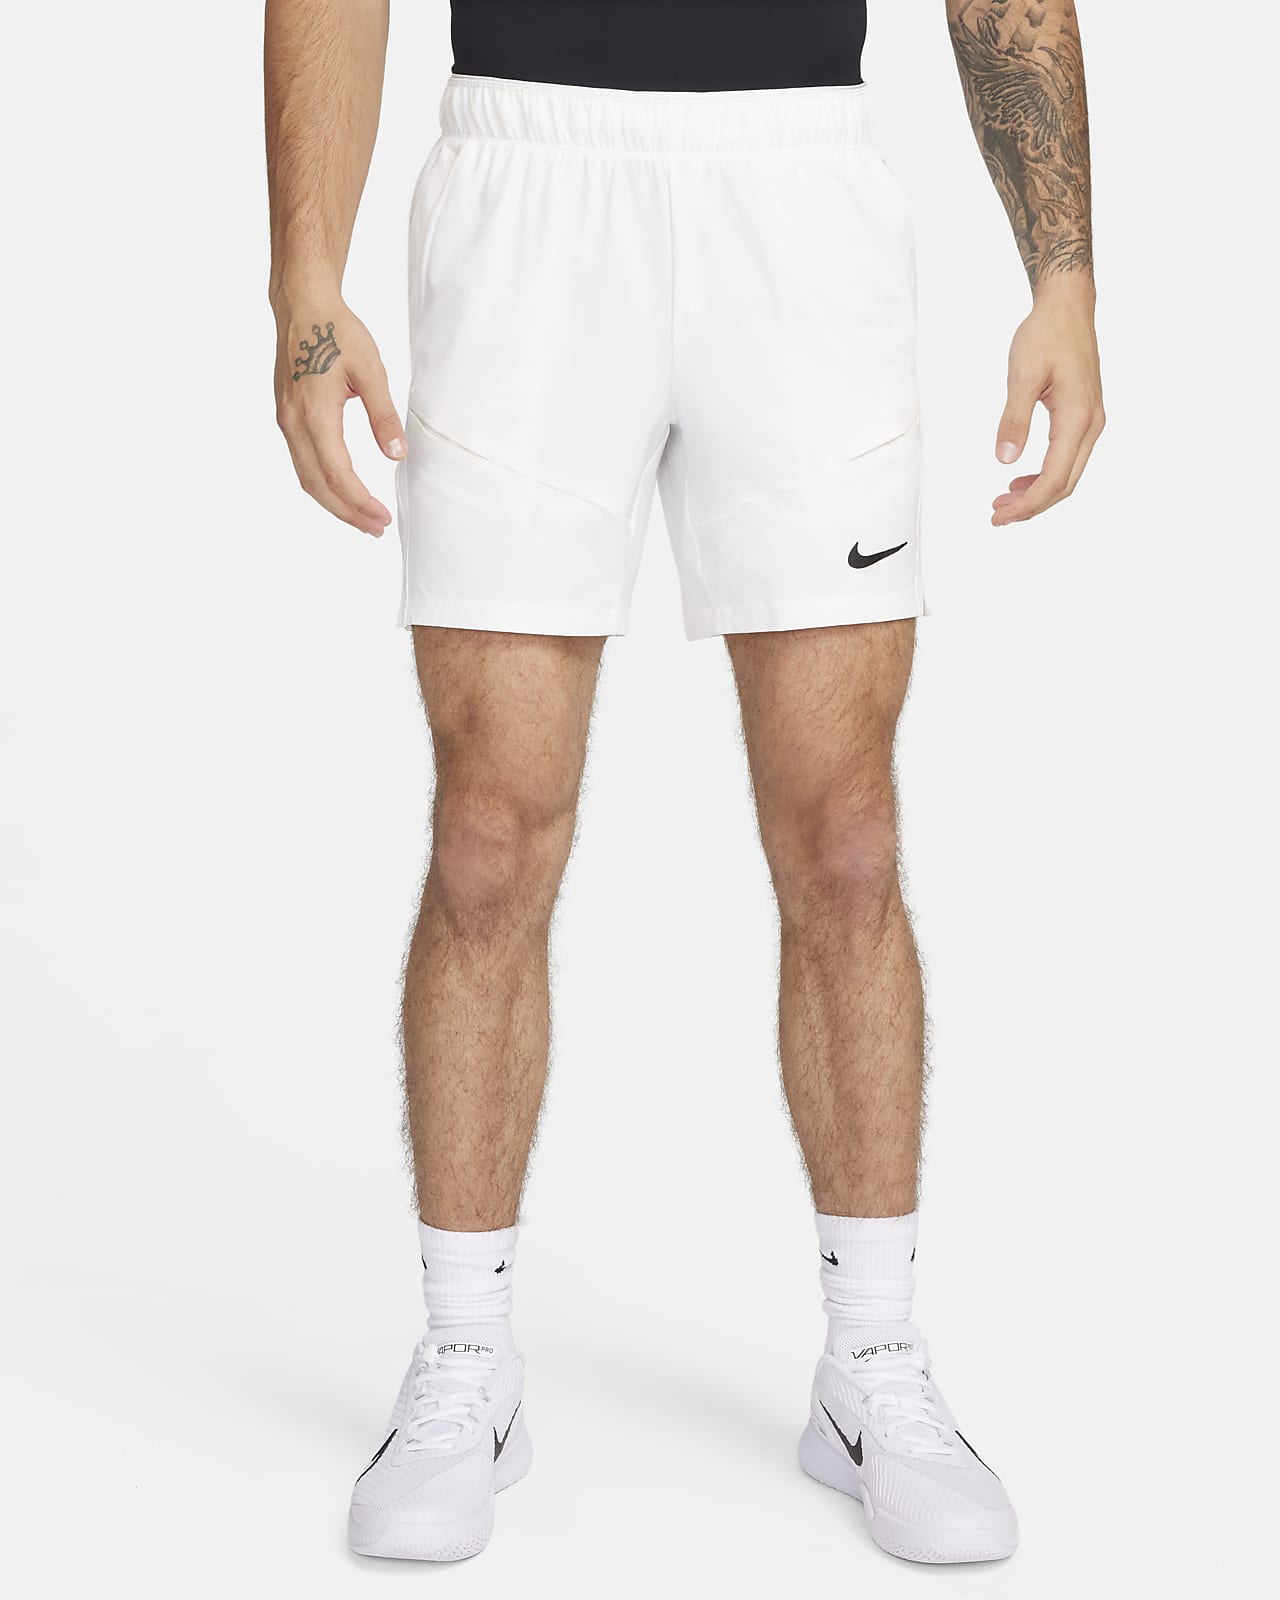 NikeCourt Advantage Dri-FIT tennisshorts (18 cm) til herre